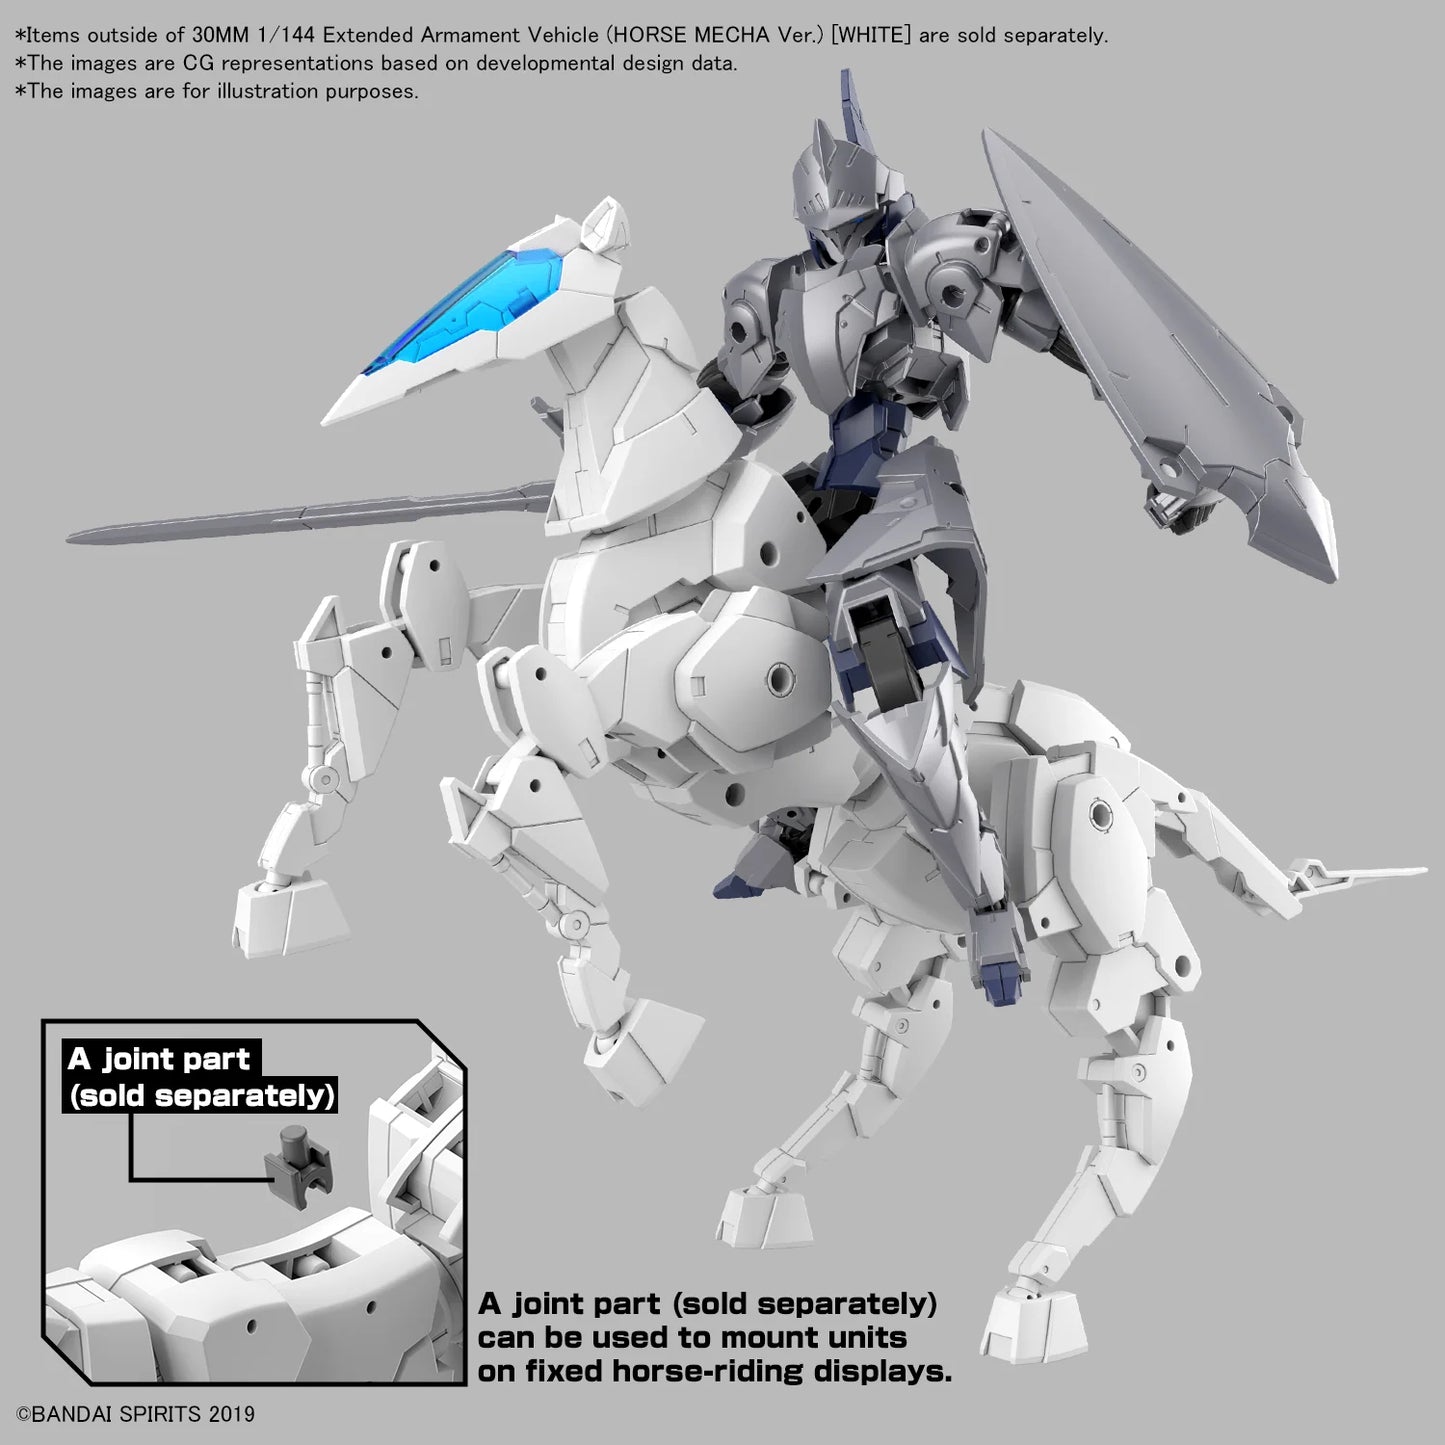 30MM - 1/144 - Extended Armament Vehicule (Horse Mecha) White